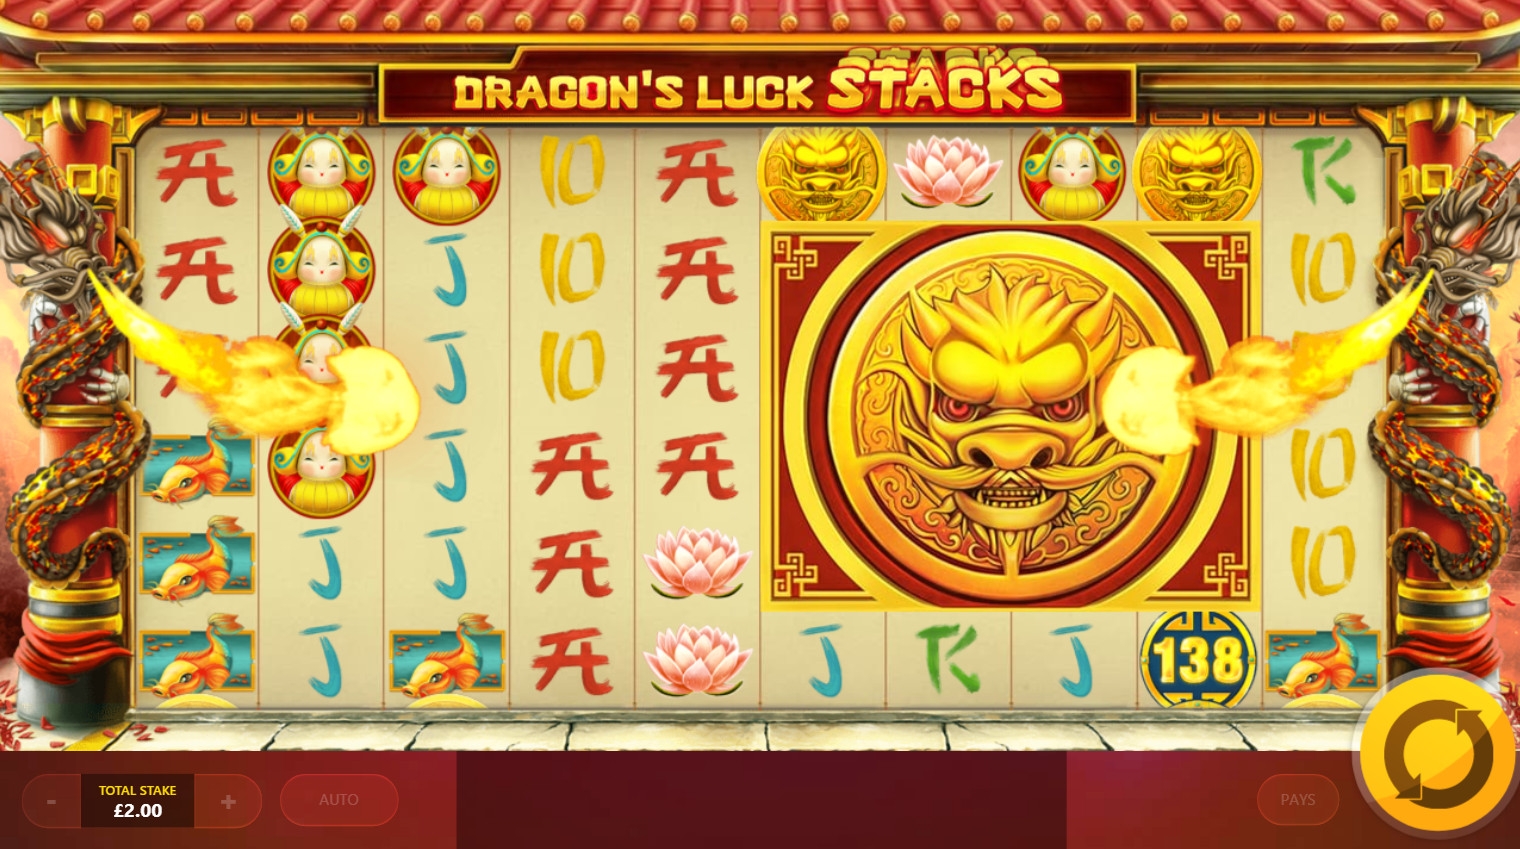 Dragon’s Luck Stacks (Dragon’s Luck Stacks) from category Slots